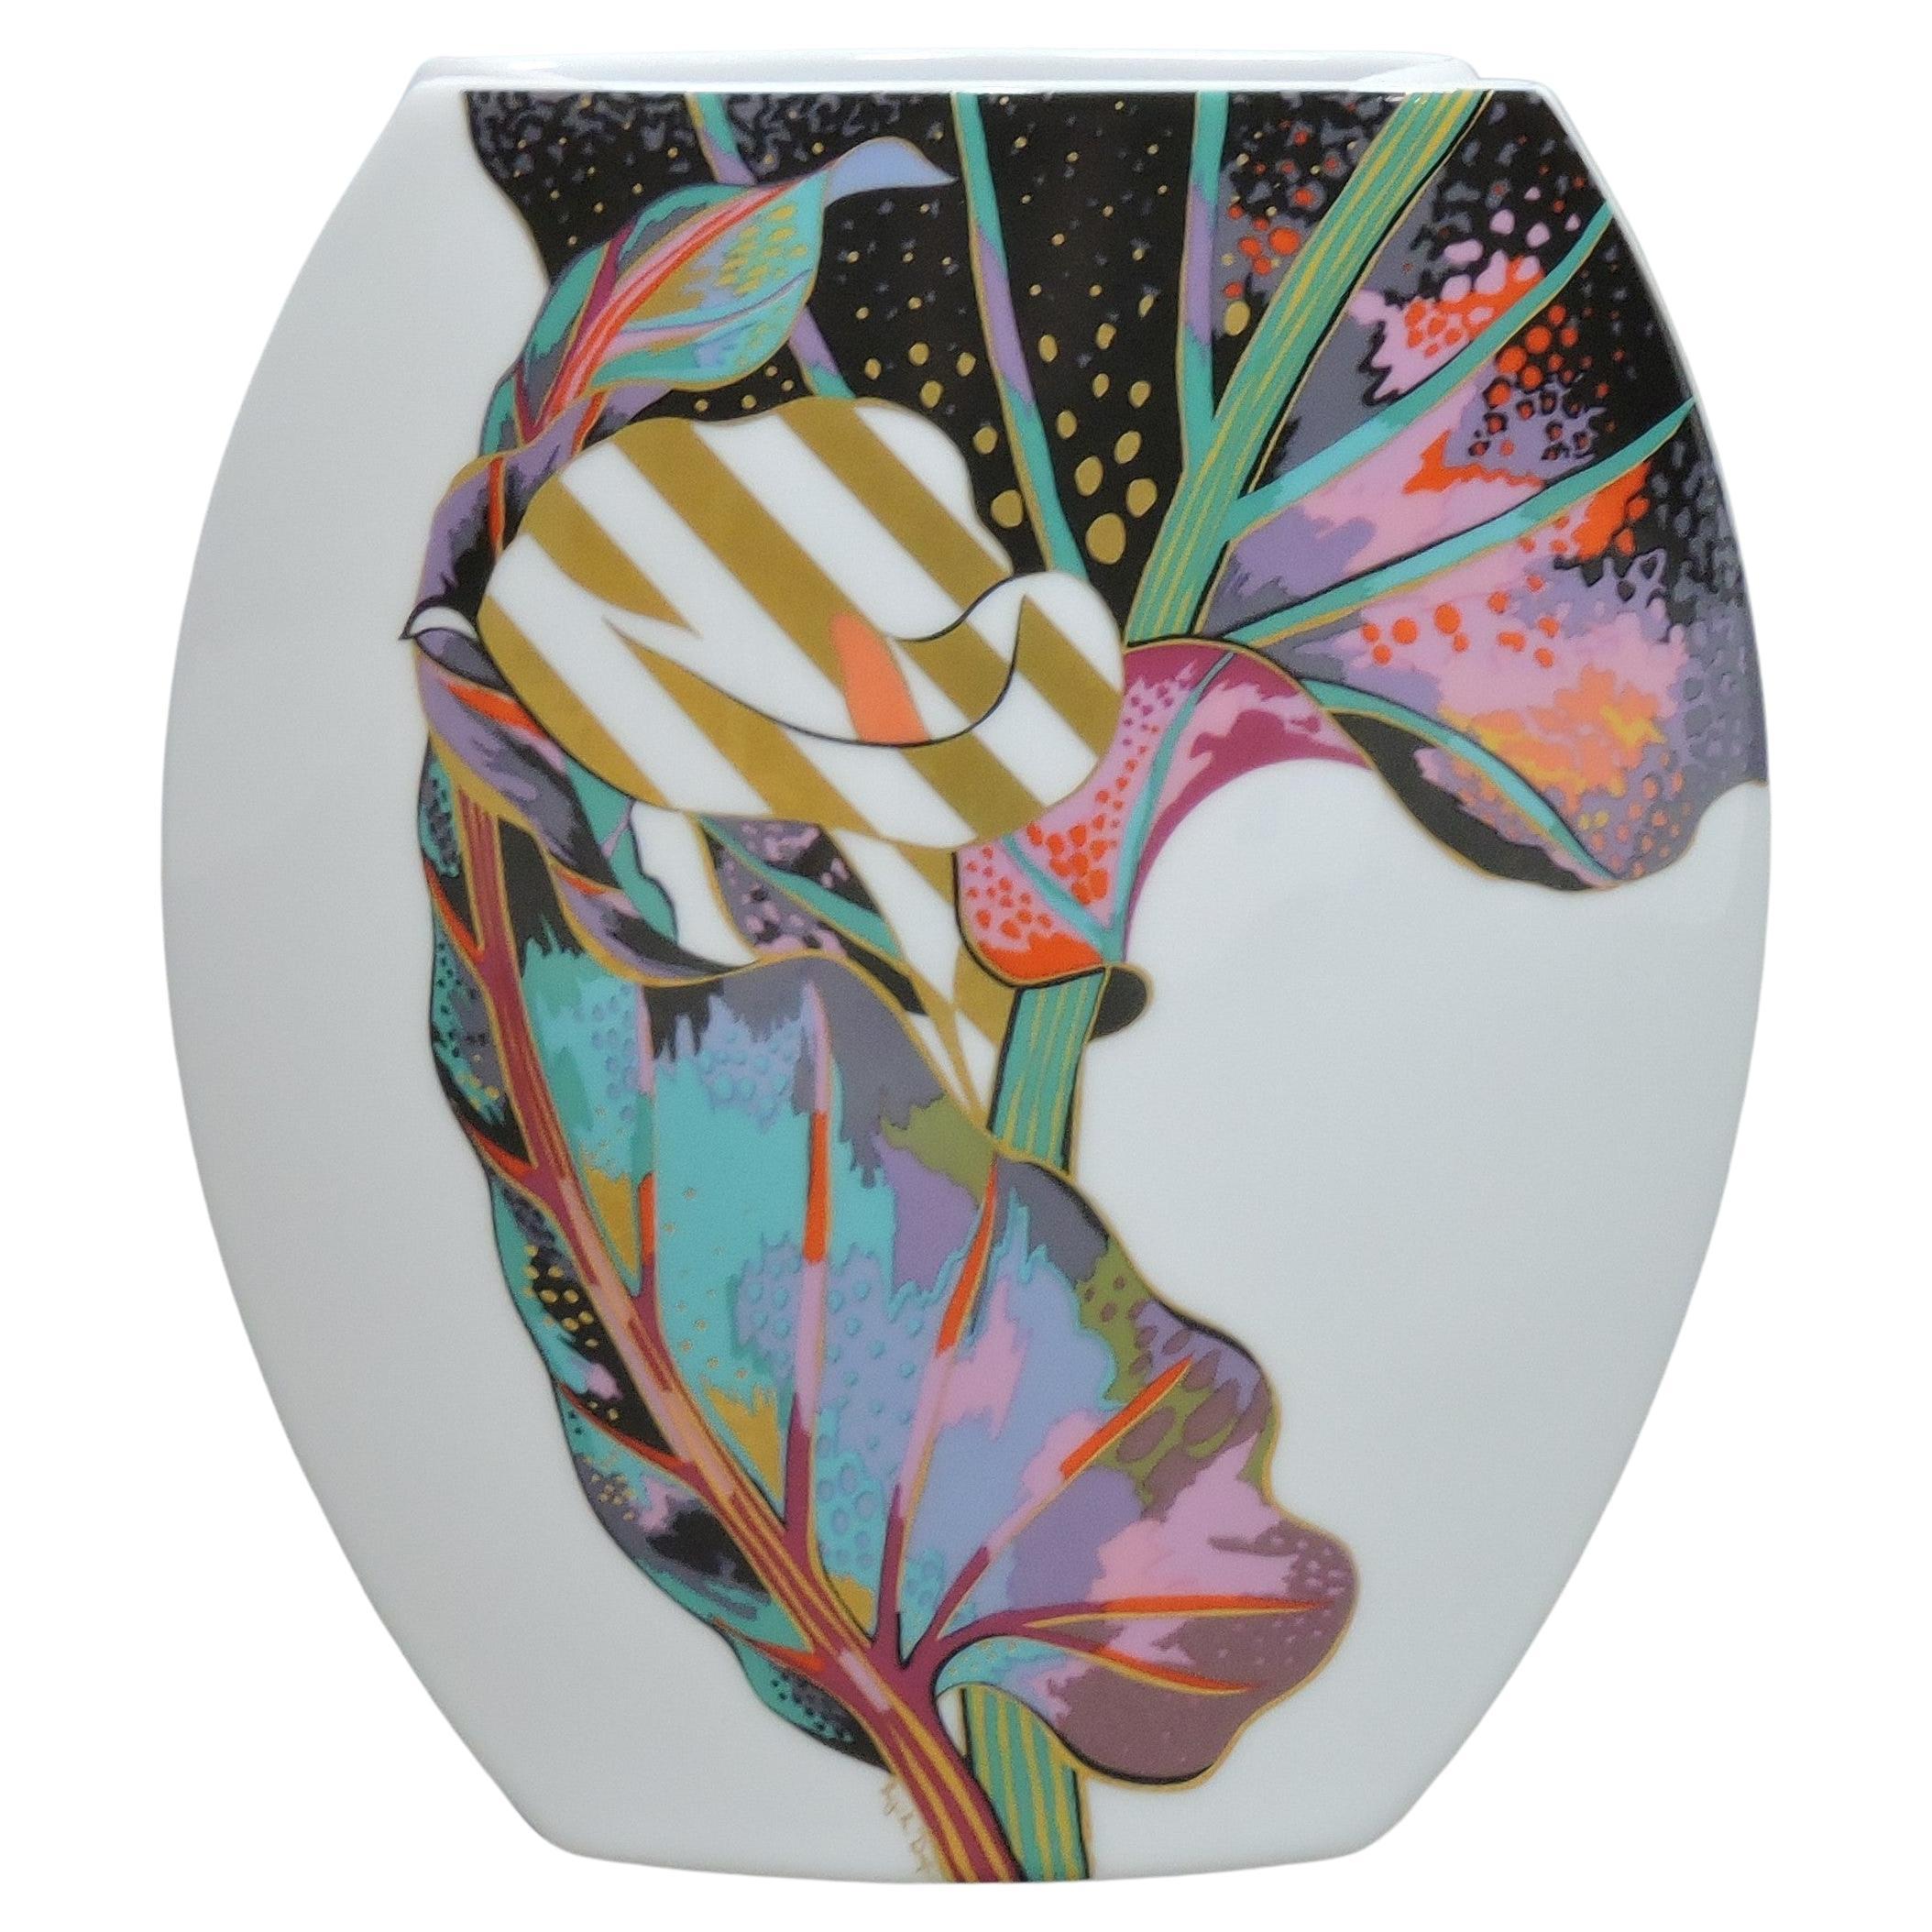 Gran jarrón Taurus de porcelana Jan van der Vaart para la línea Studio de Rosenthal